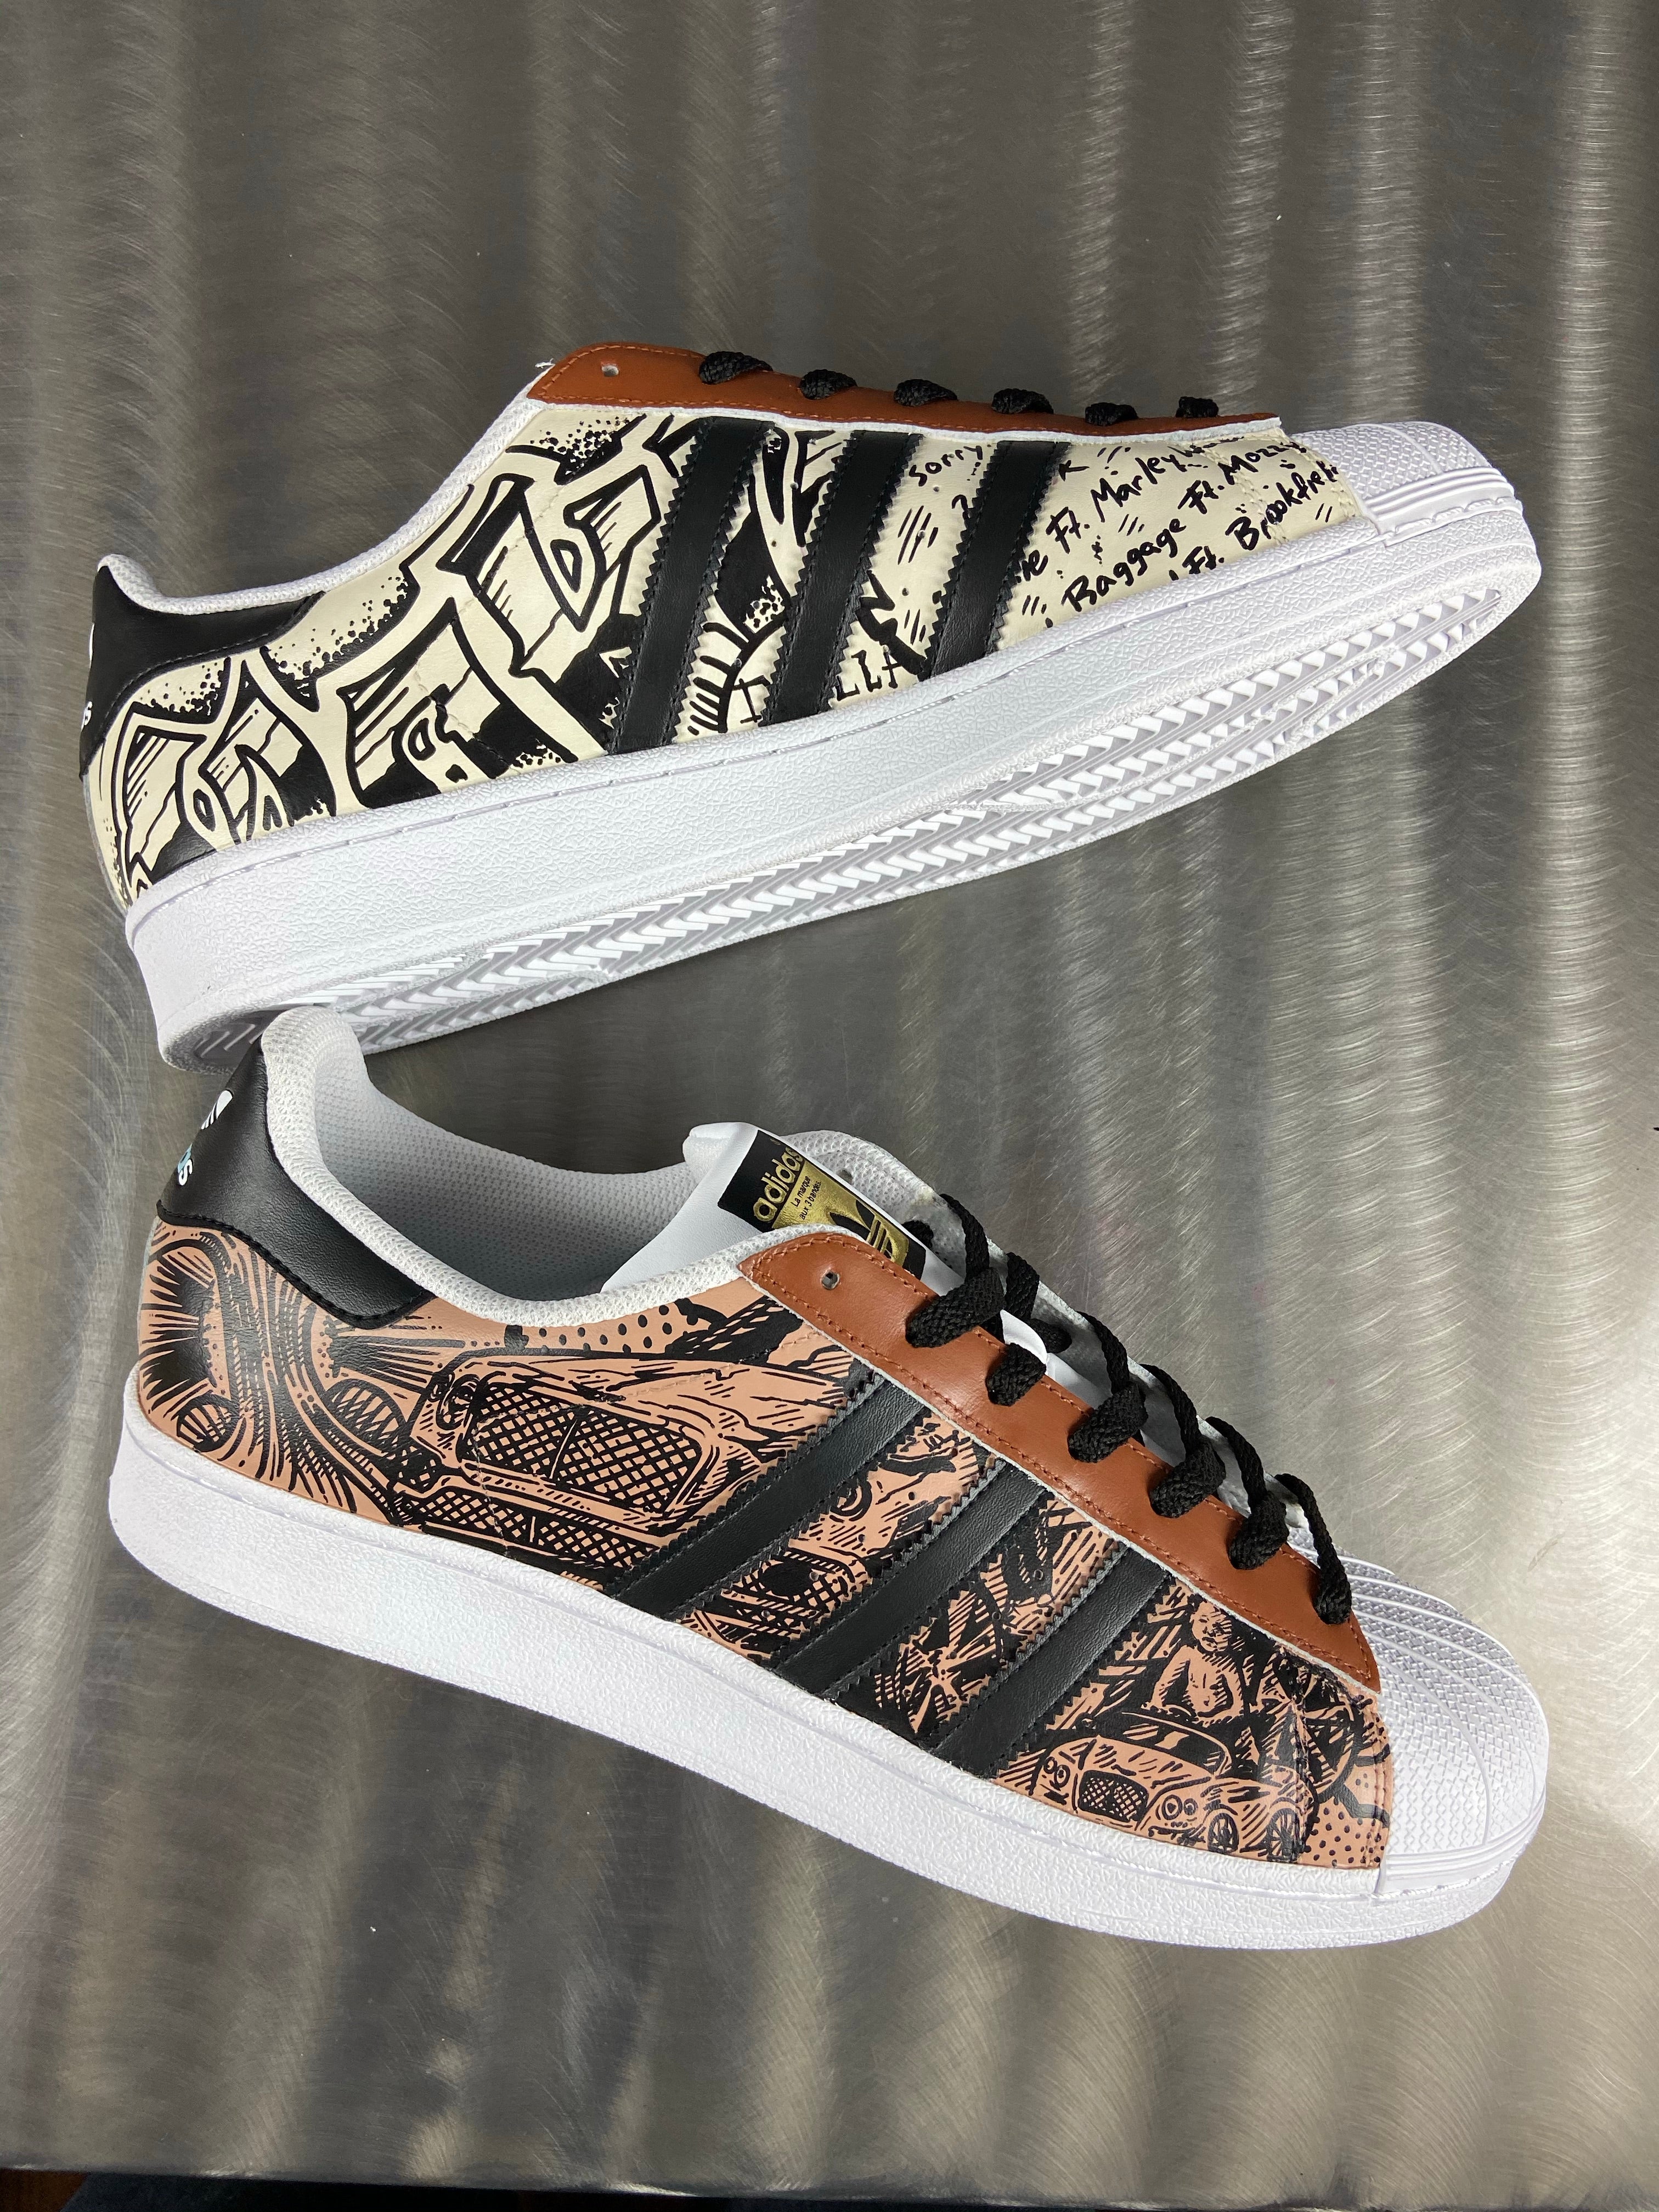 adidas leopard sneakers | Leopard sneakers, Sneakers, Leopard print sneakers